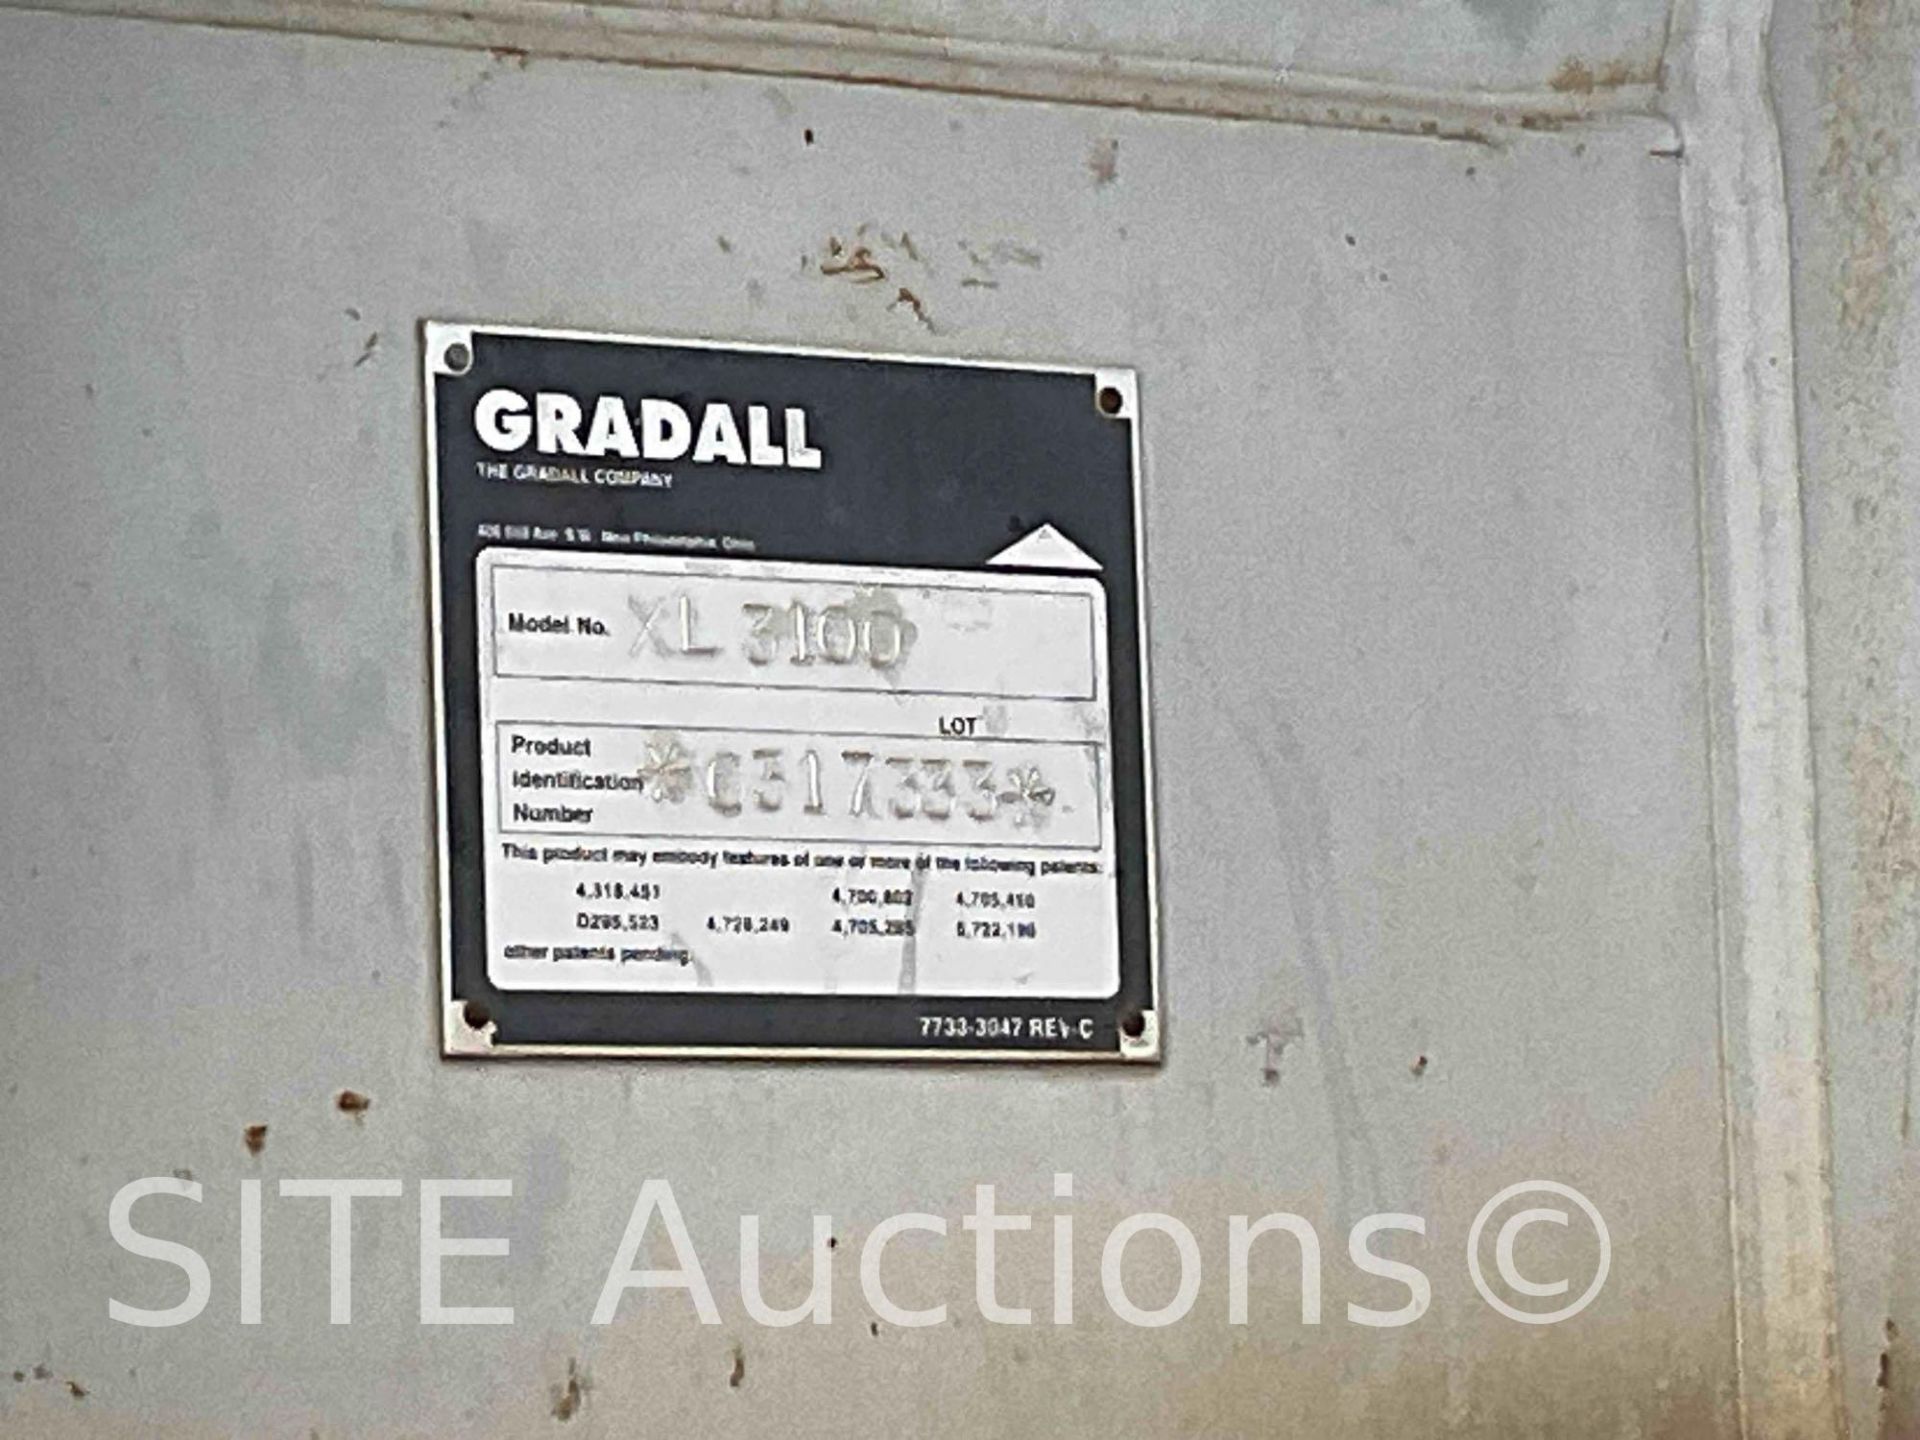 2001 Gradall XL3100 Wheeled Excavator - Image 10 of 34